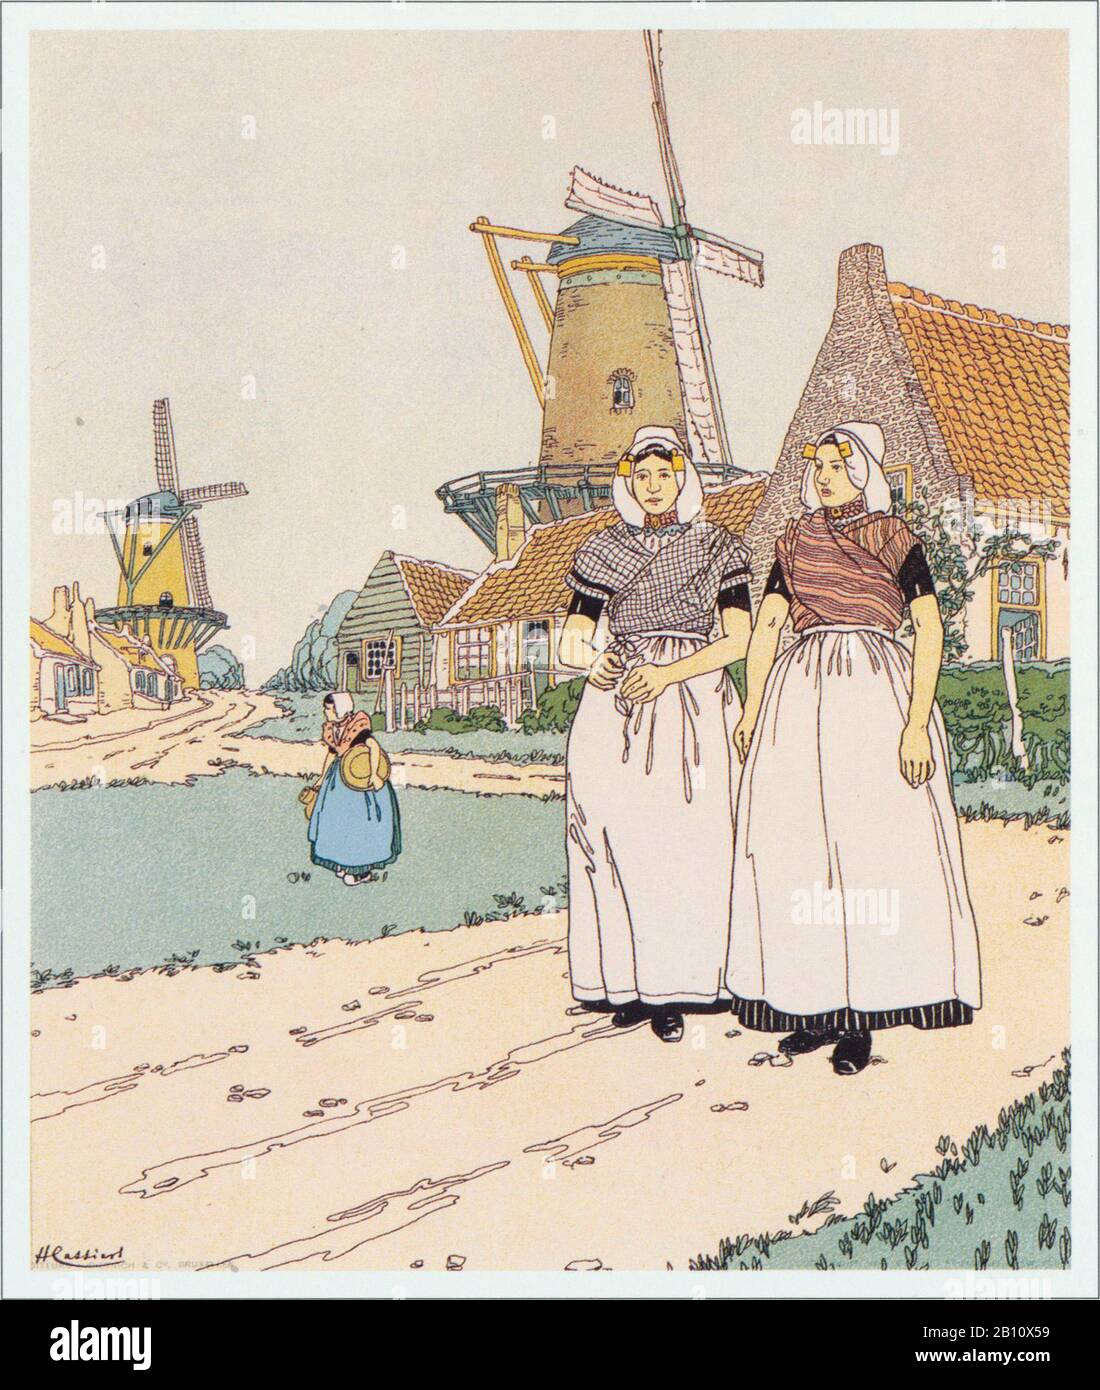 Zeeland molens - Ilustración de Henri cassers (1858 - 1944) Foto de stock